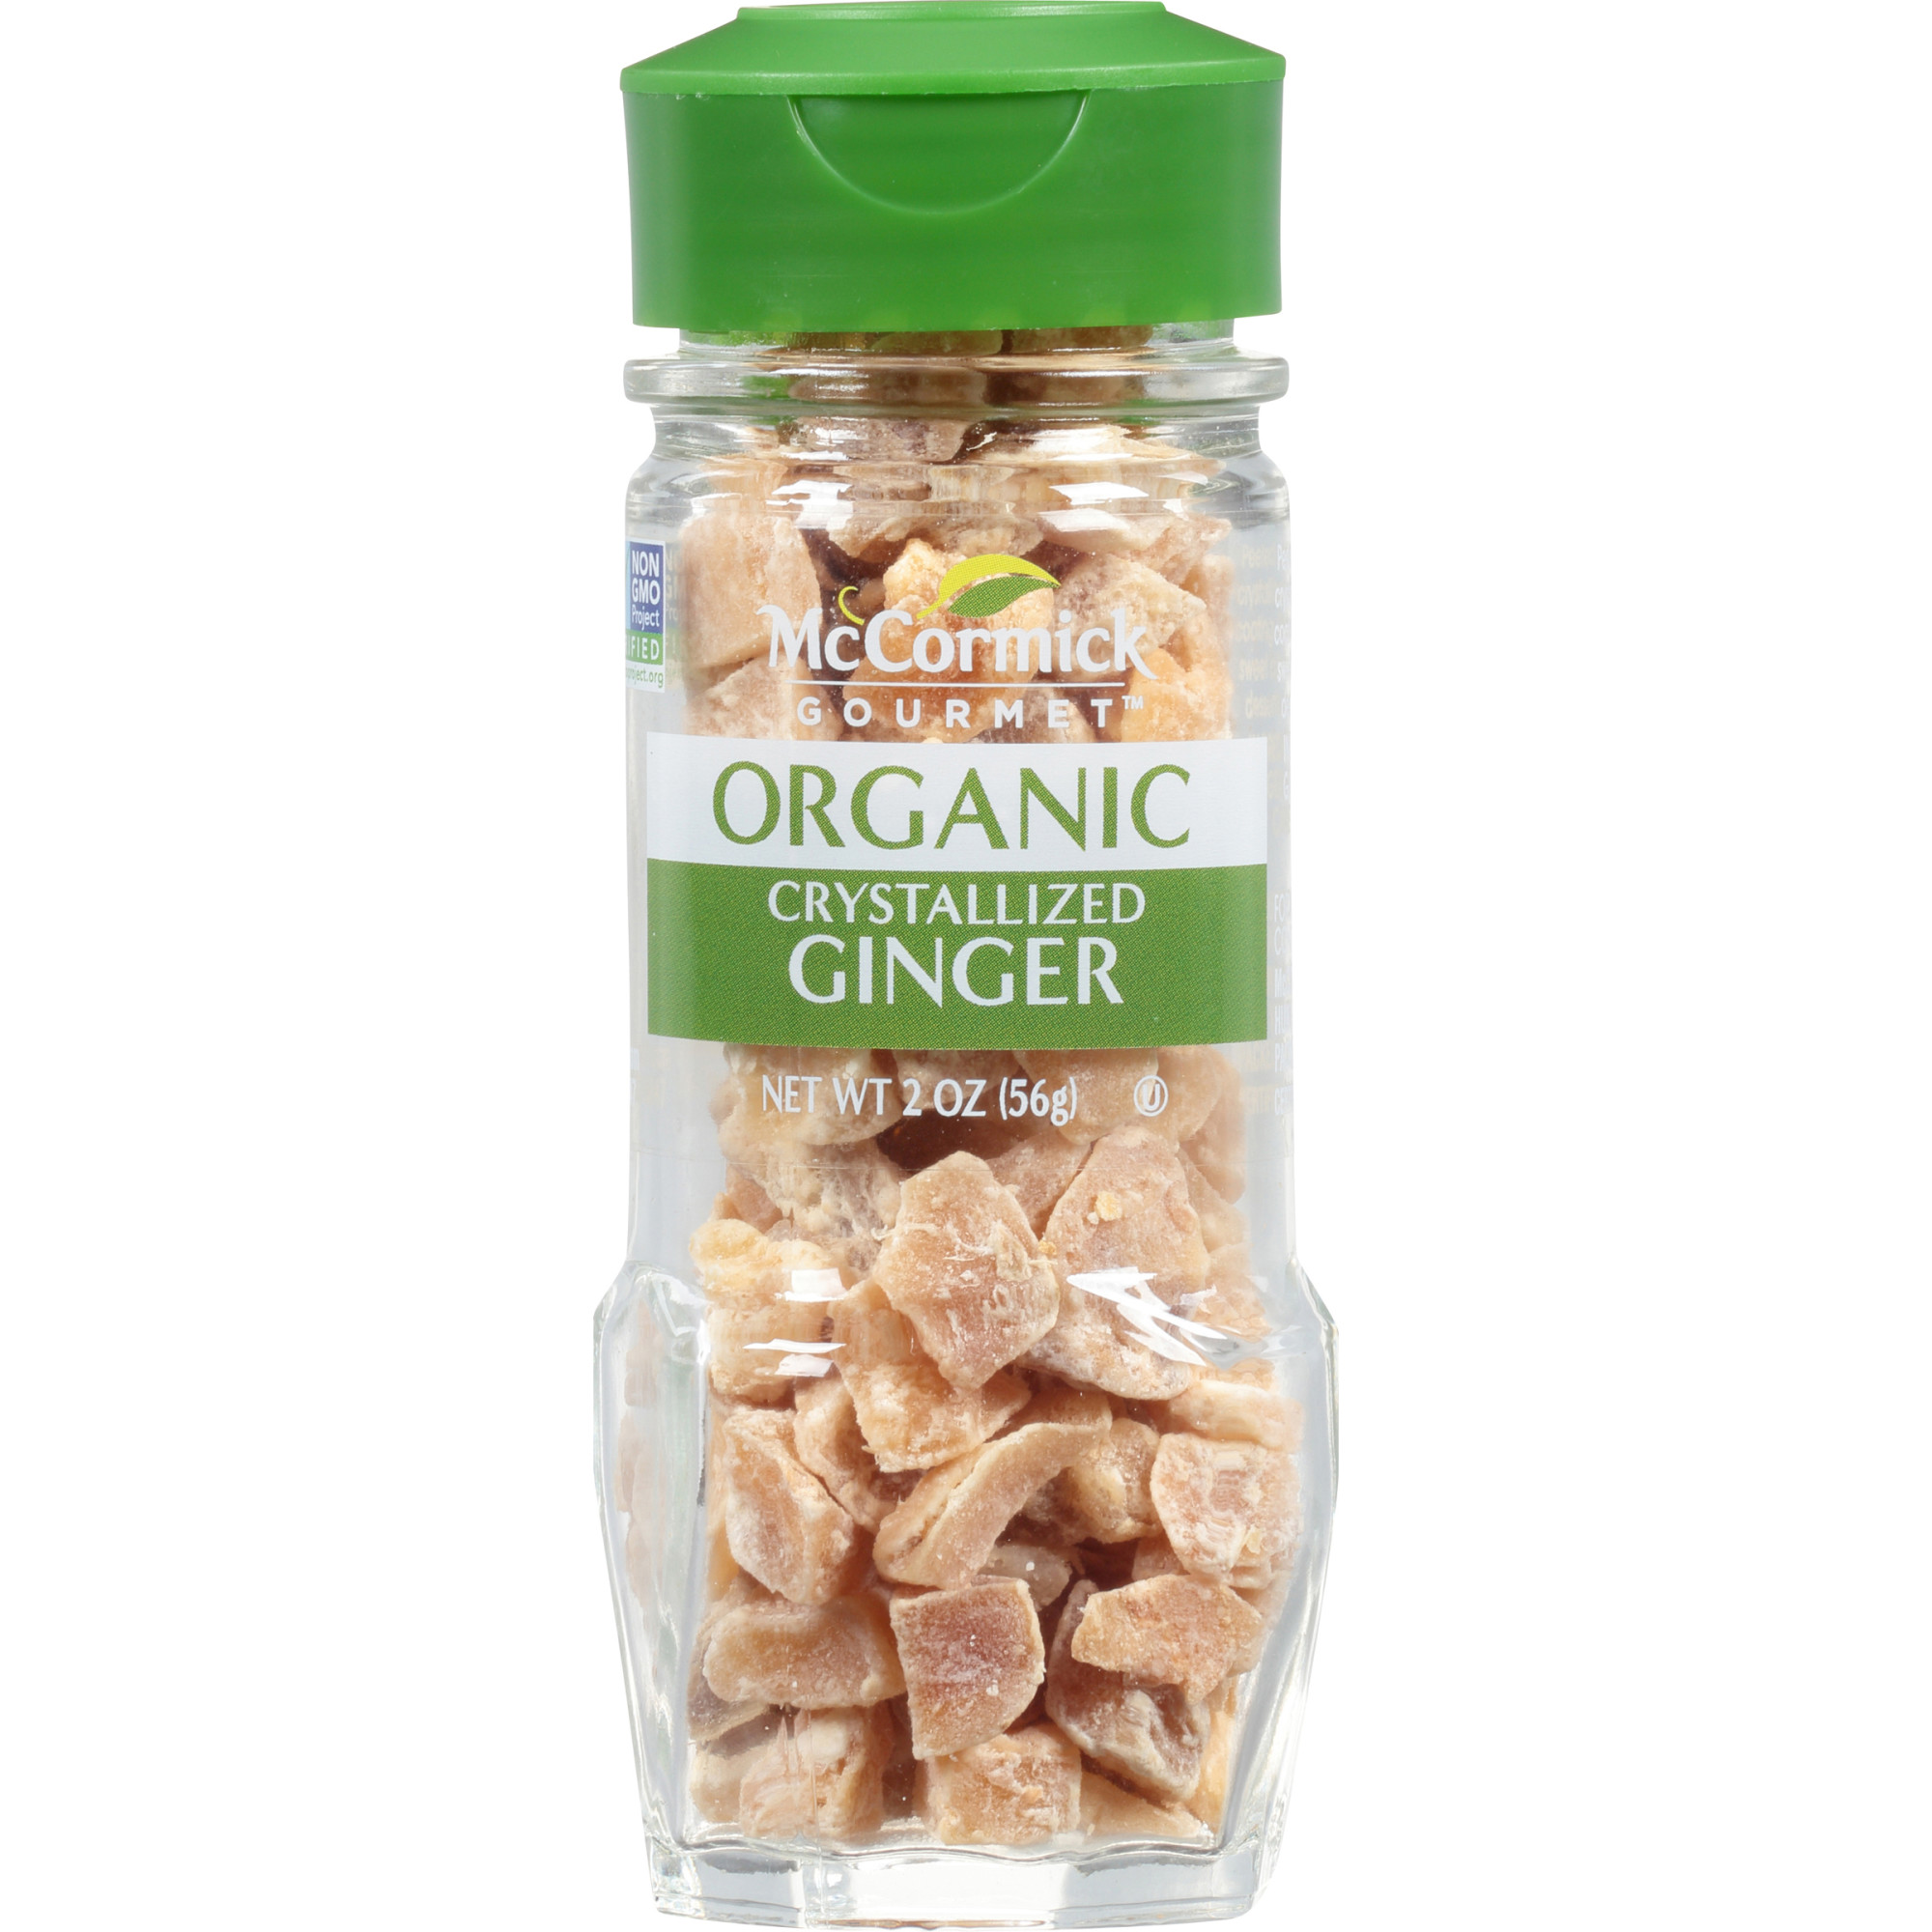 McCormick Gourmet Organic Crystallized Ginger, 2 oz Bottle - image 1 of 12